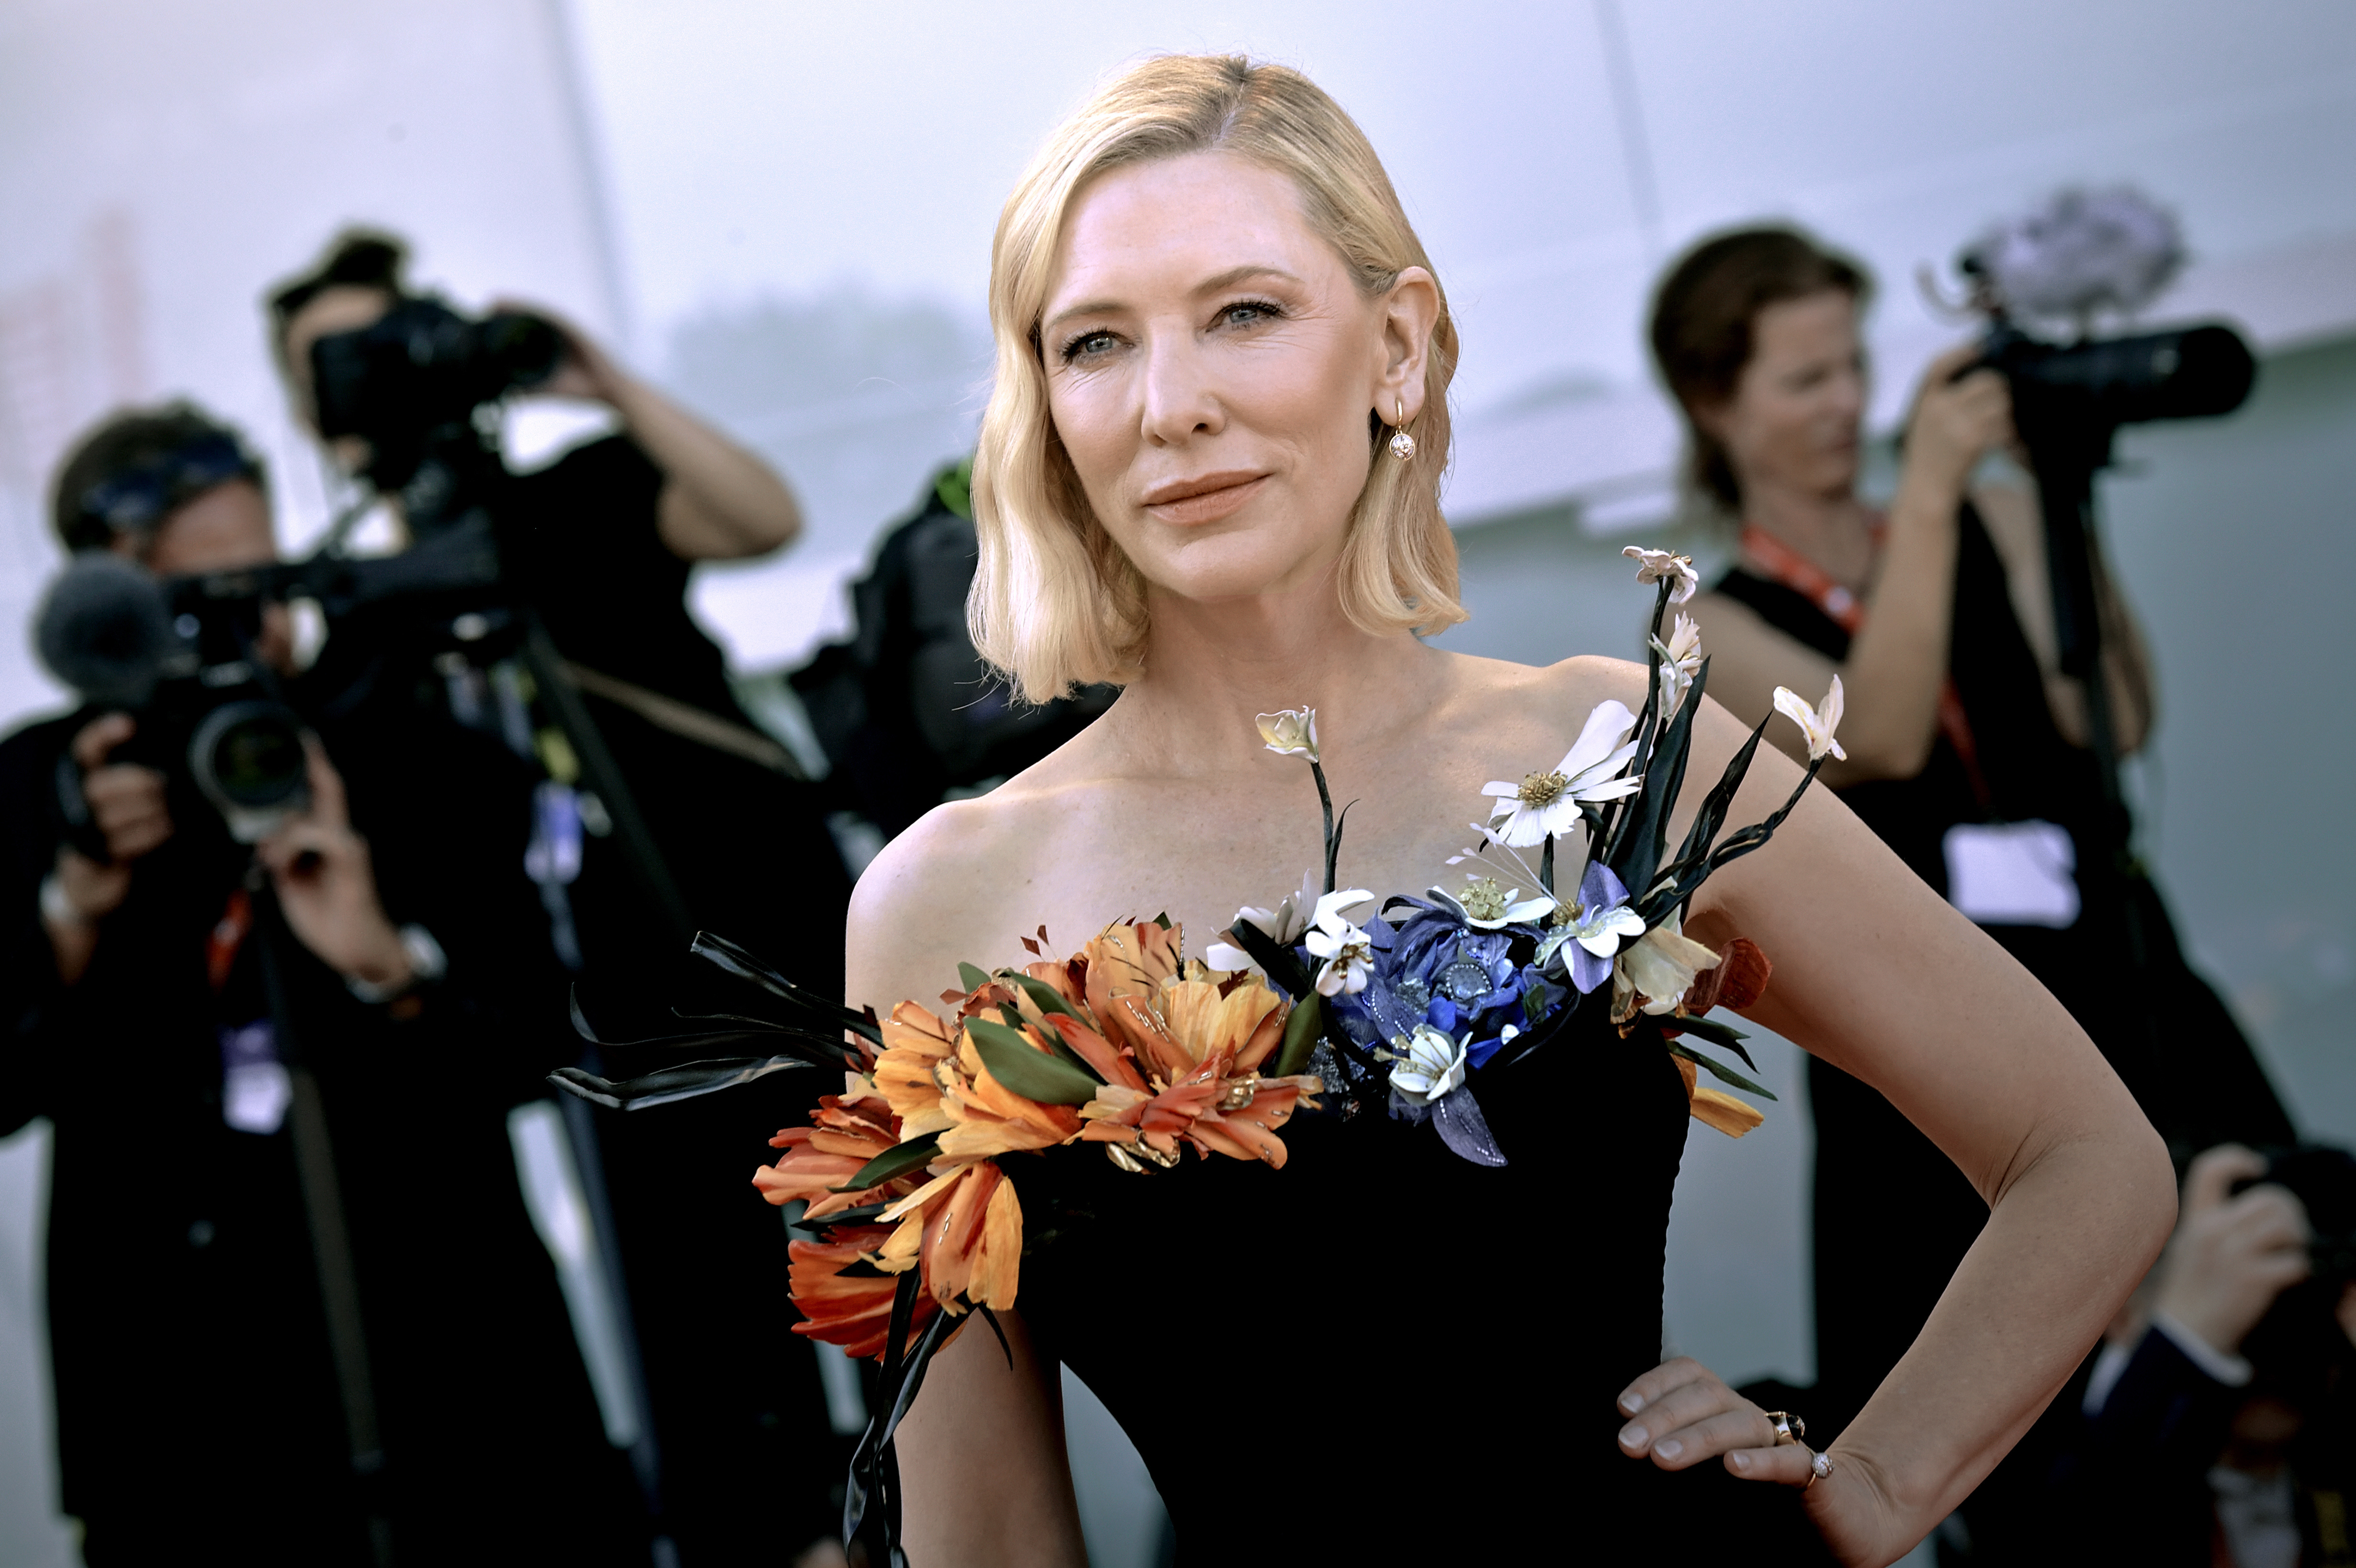 Carolina Herrera - Carolina Herrera on Cate Blanchett makes a